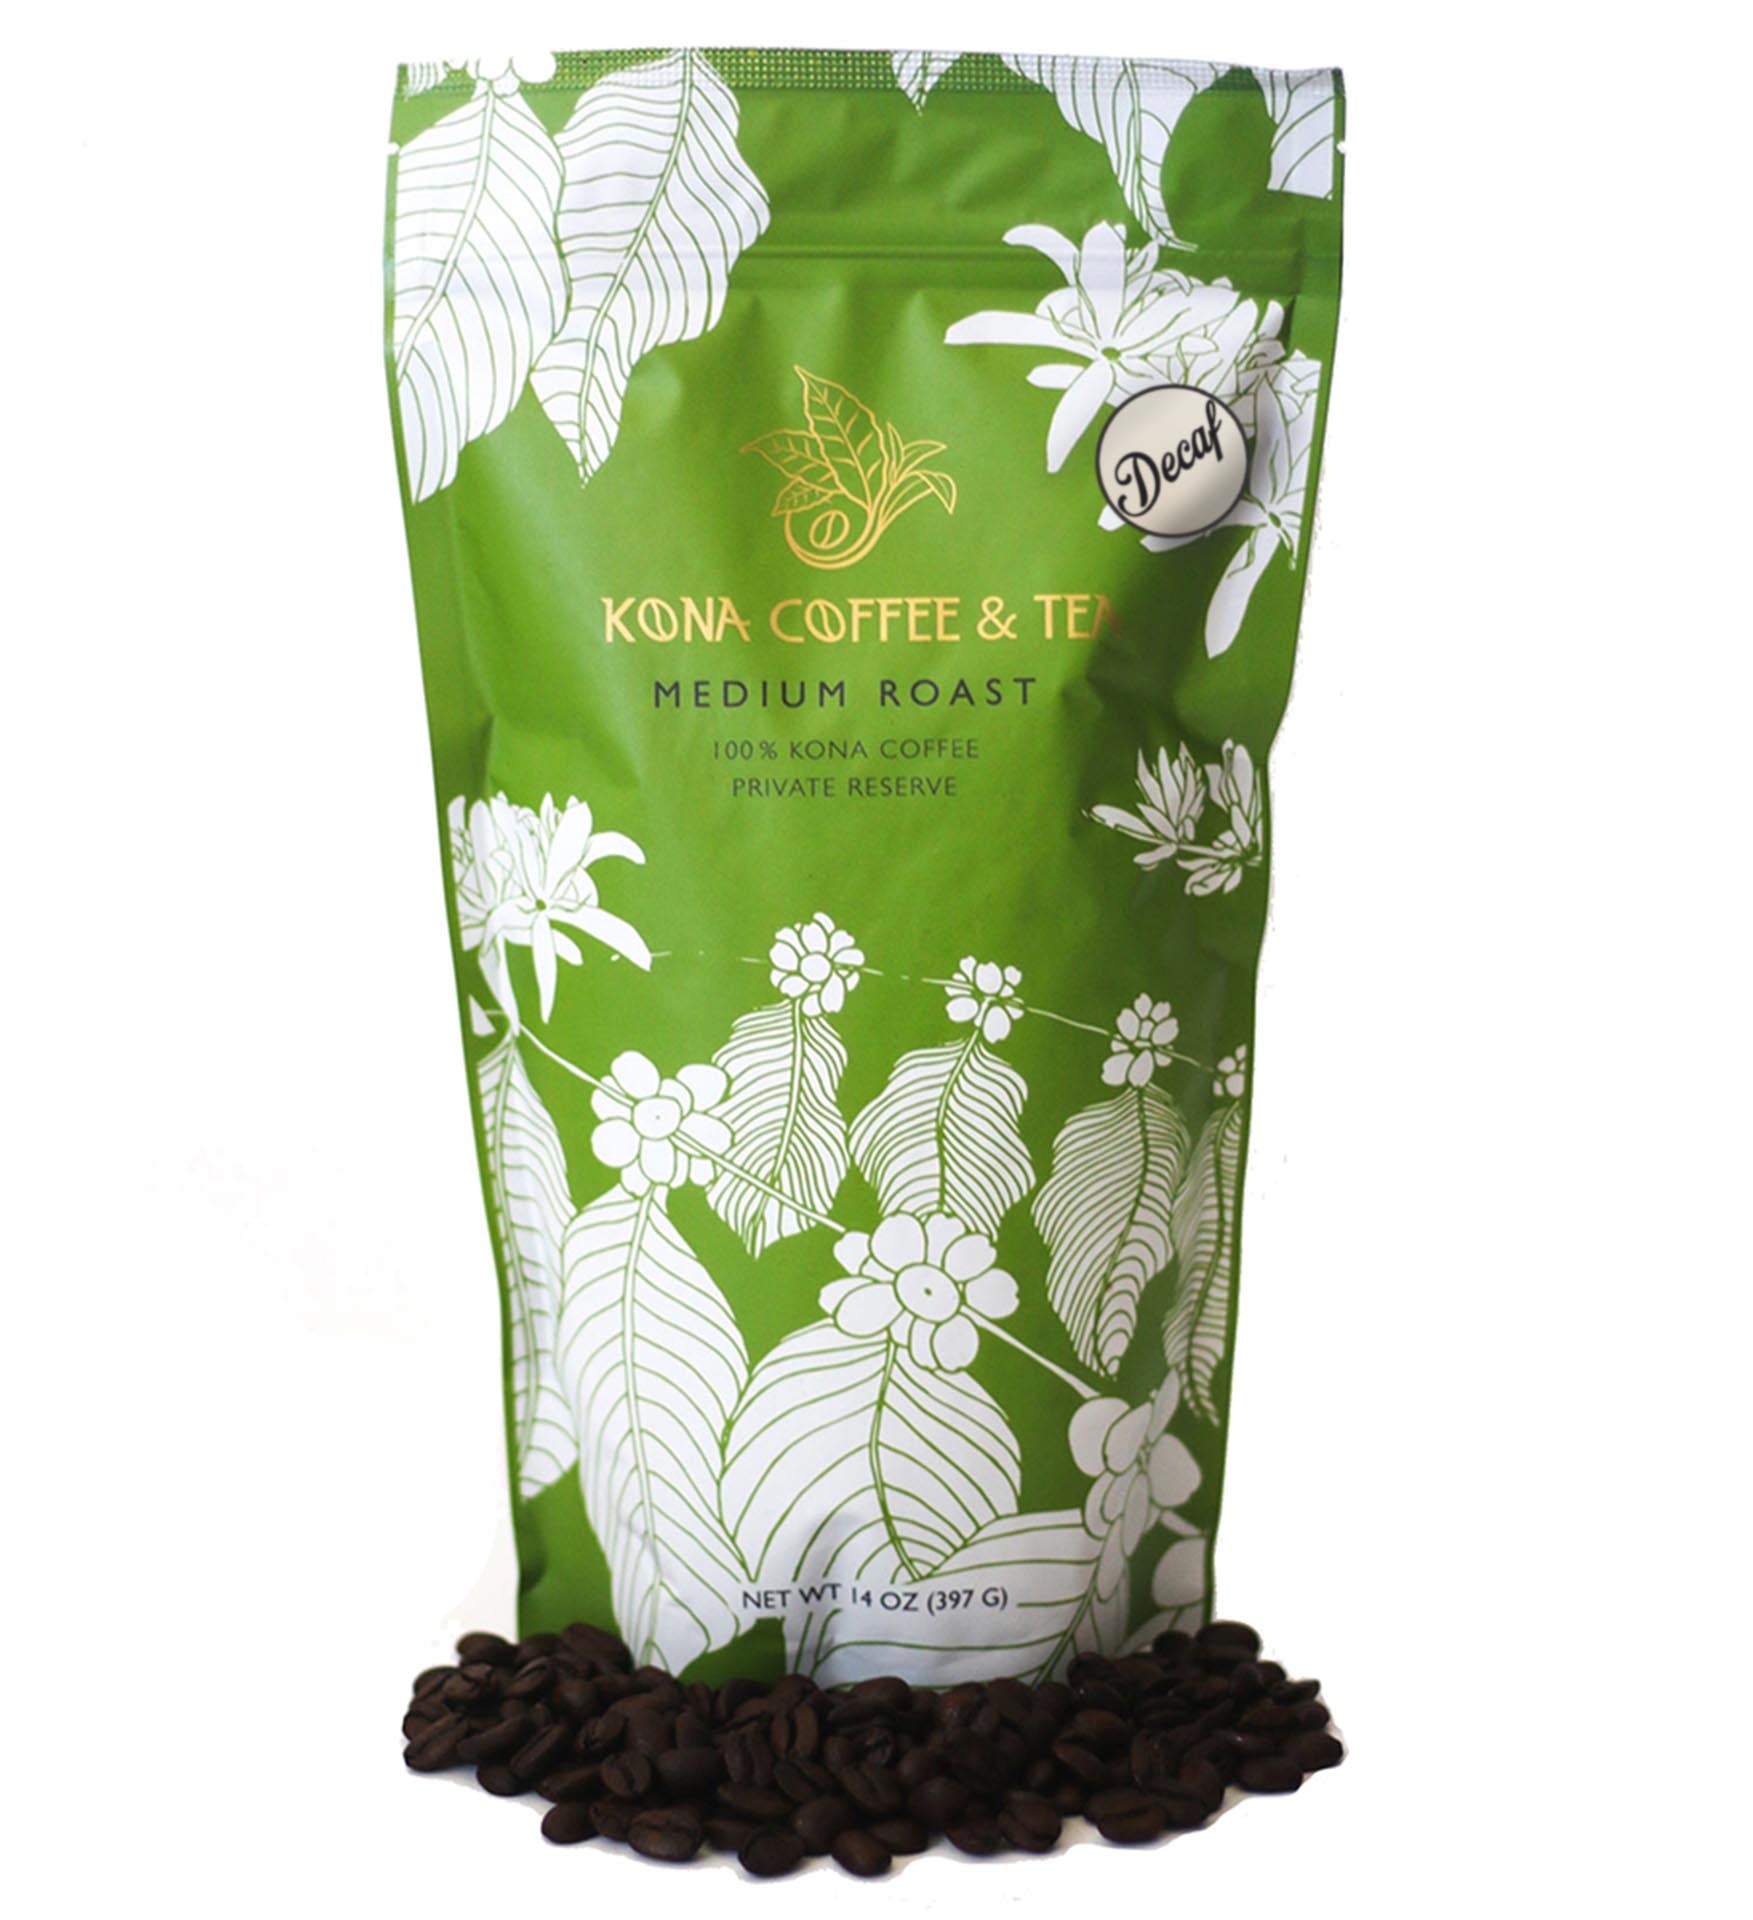 Decaf 100% Kona Coffee